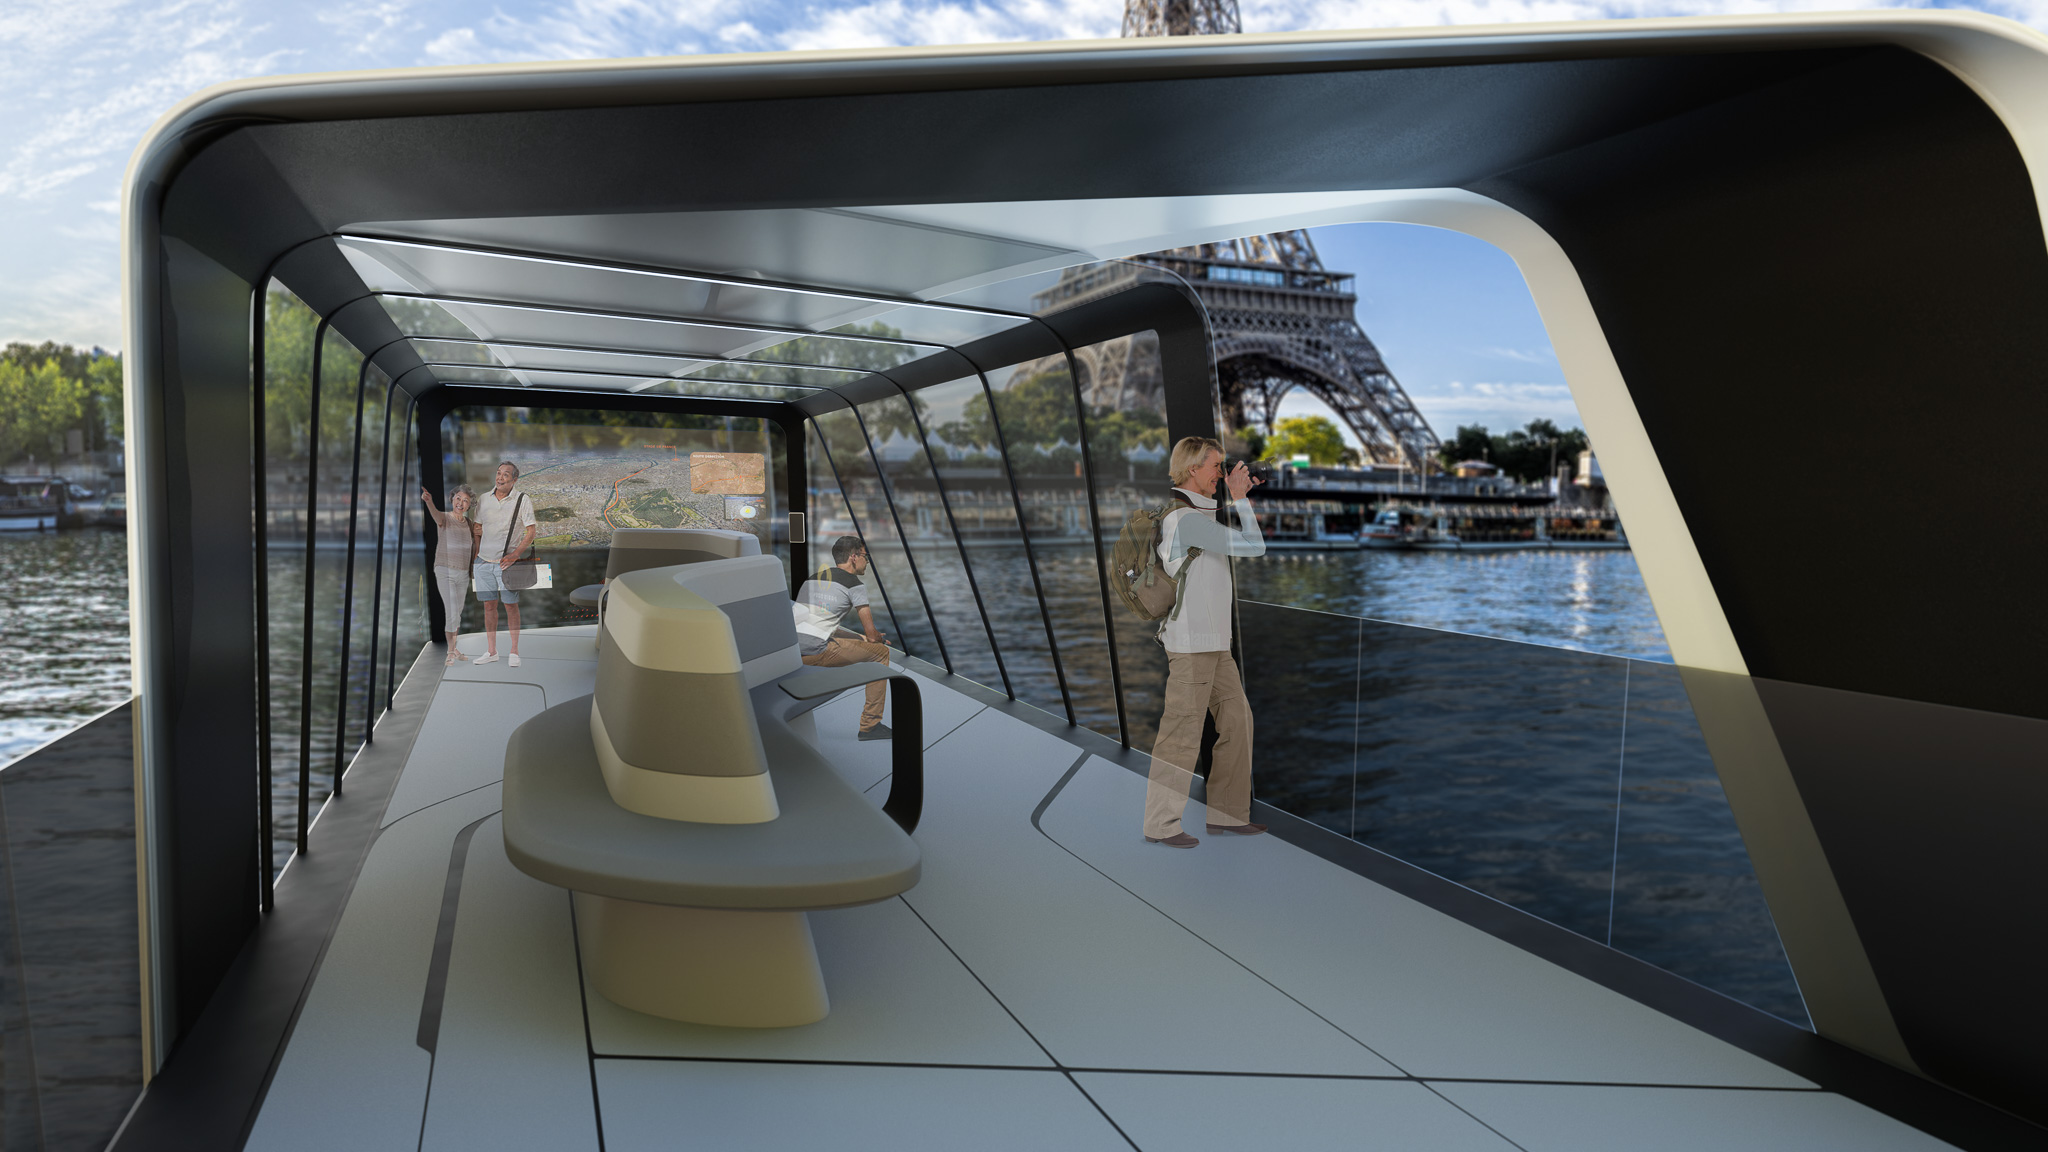 electrical-and-autonomous-ferry-paris-olympic-games-royal-van-der-leun-electrical-installation-autonome-ferry-vdl-seine-eiffel-tower